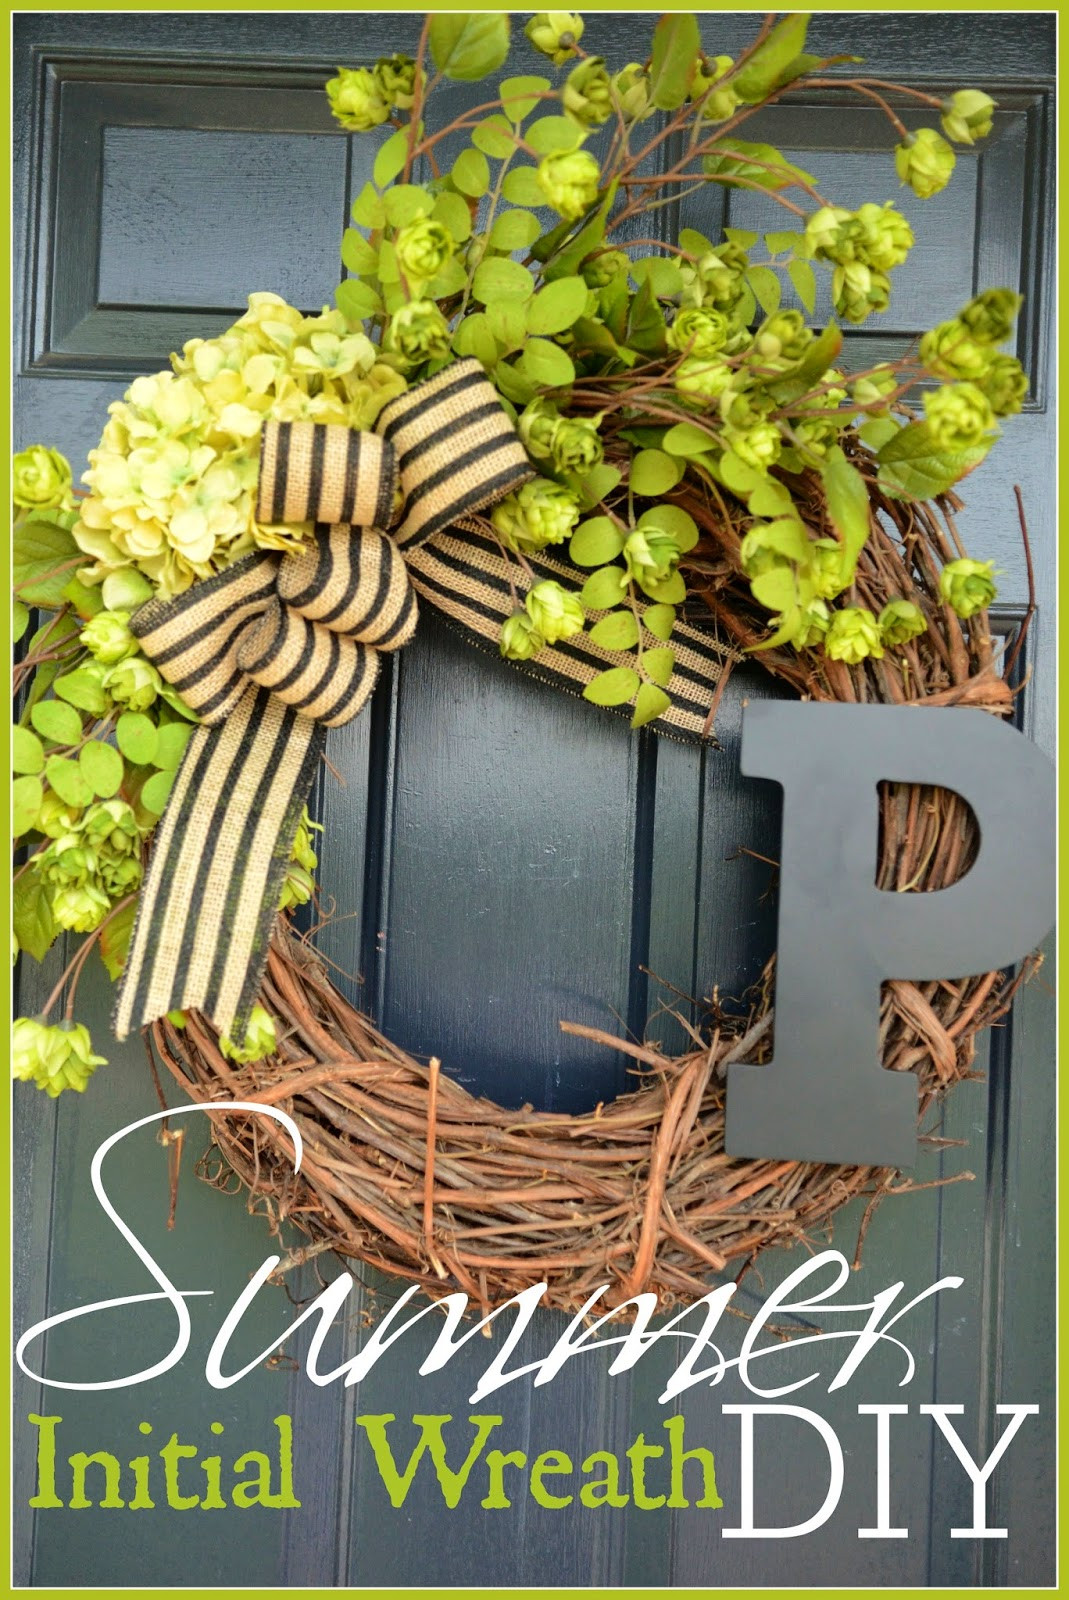 Summer Wreath Diy
 SUMMER INITIAL WREATH DIY StoneGable